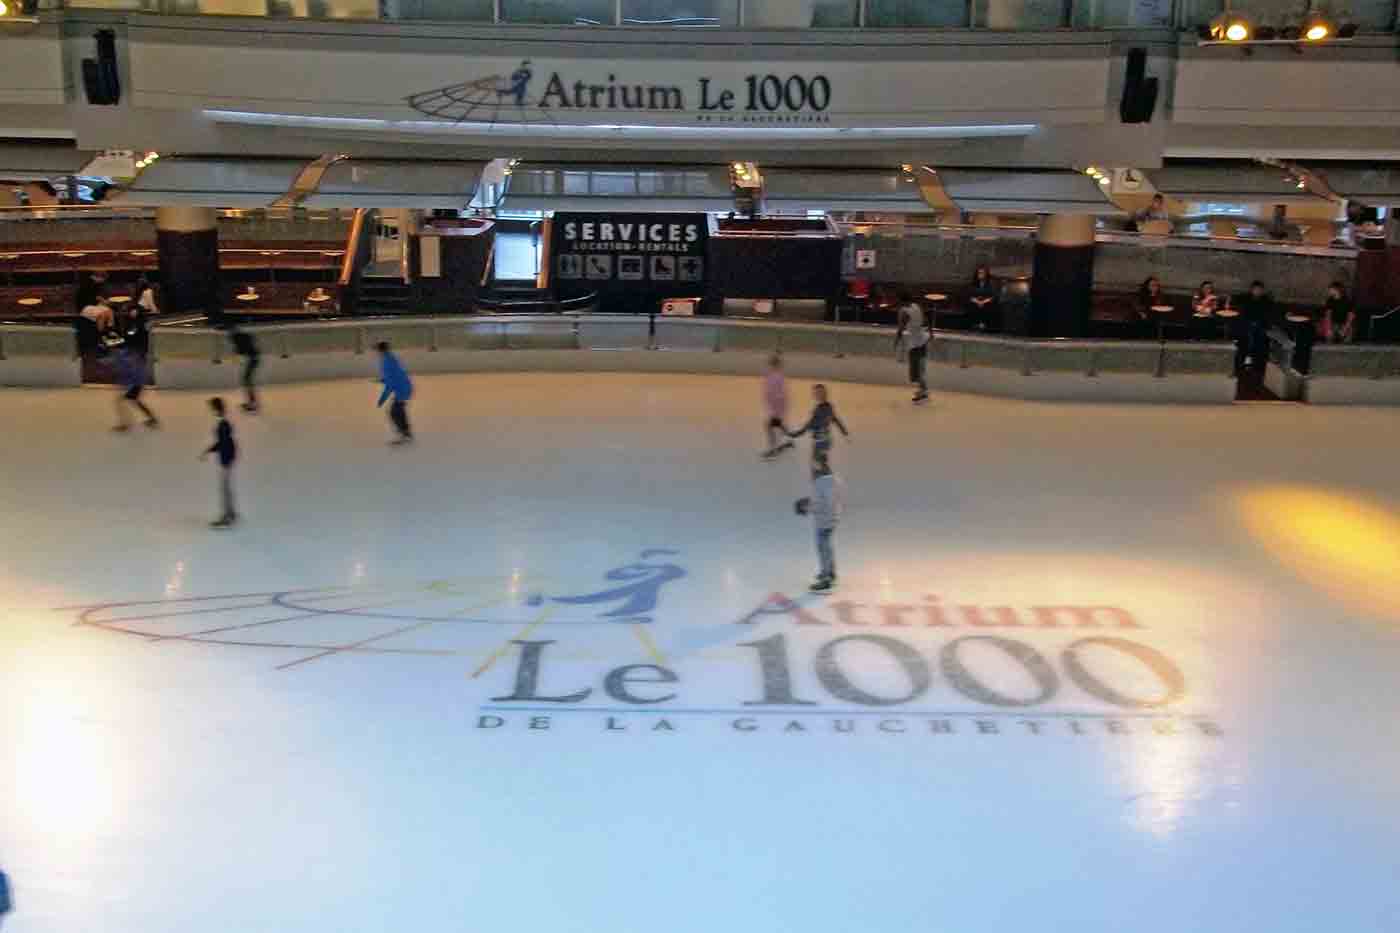 Atrium Le 1000 Skating Ring